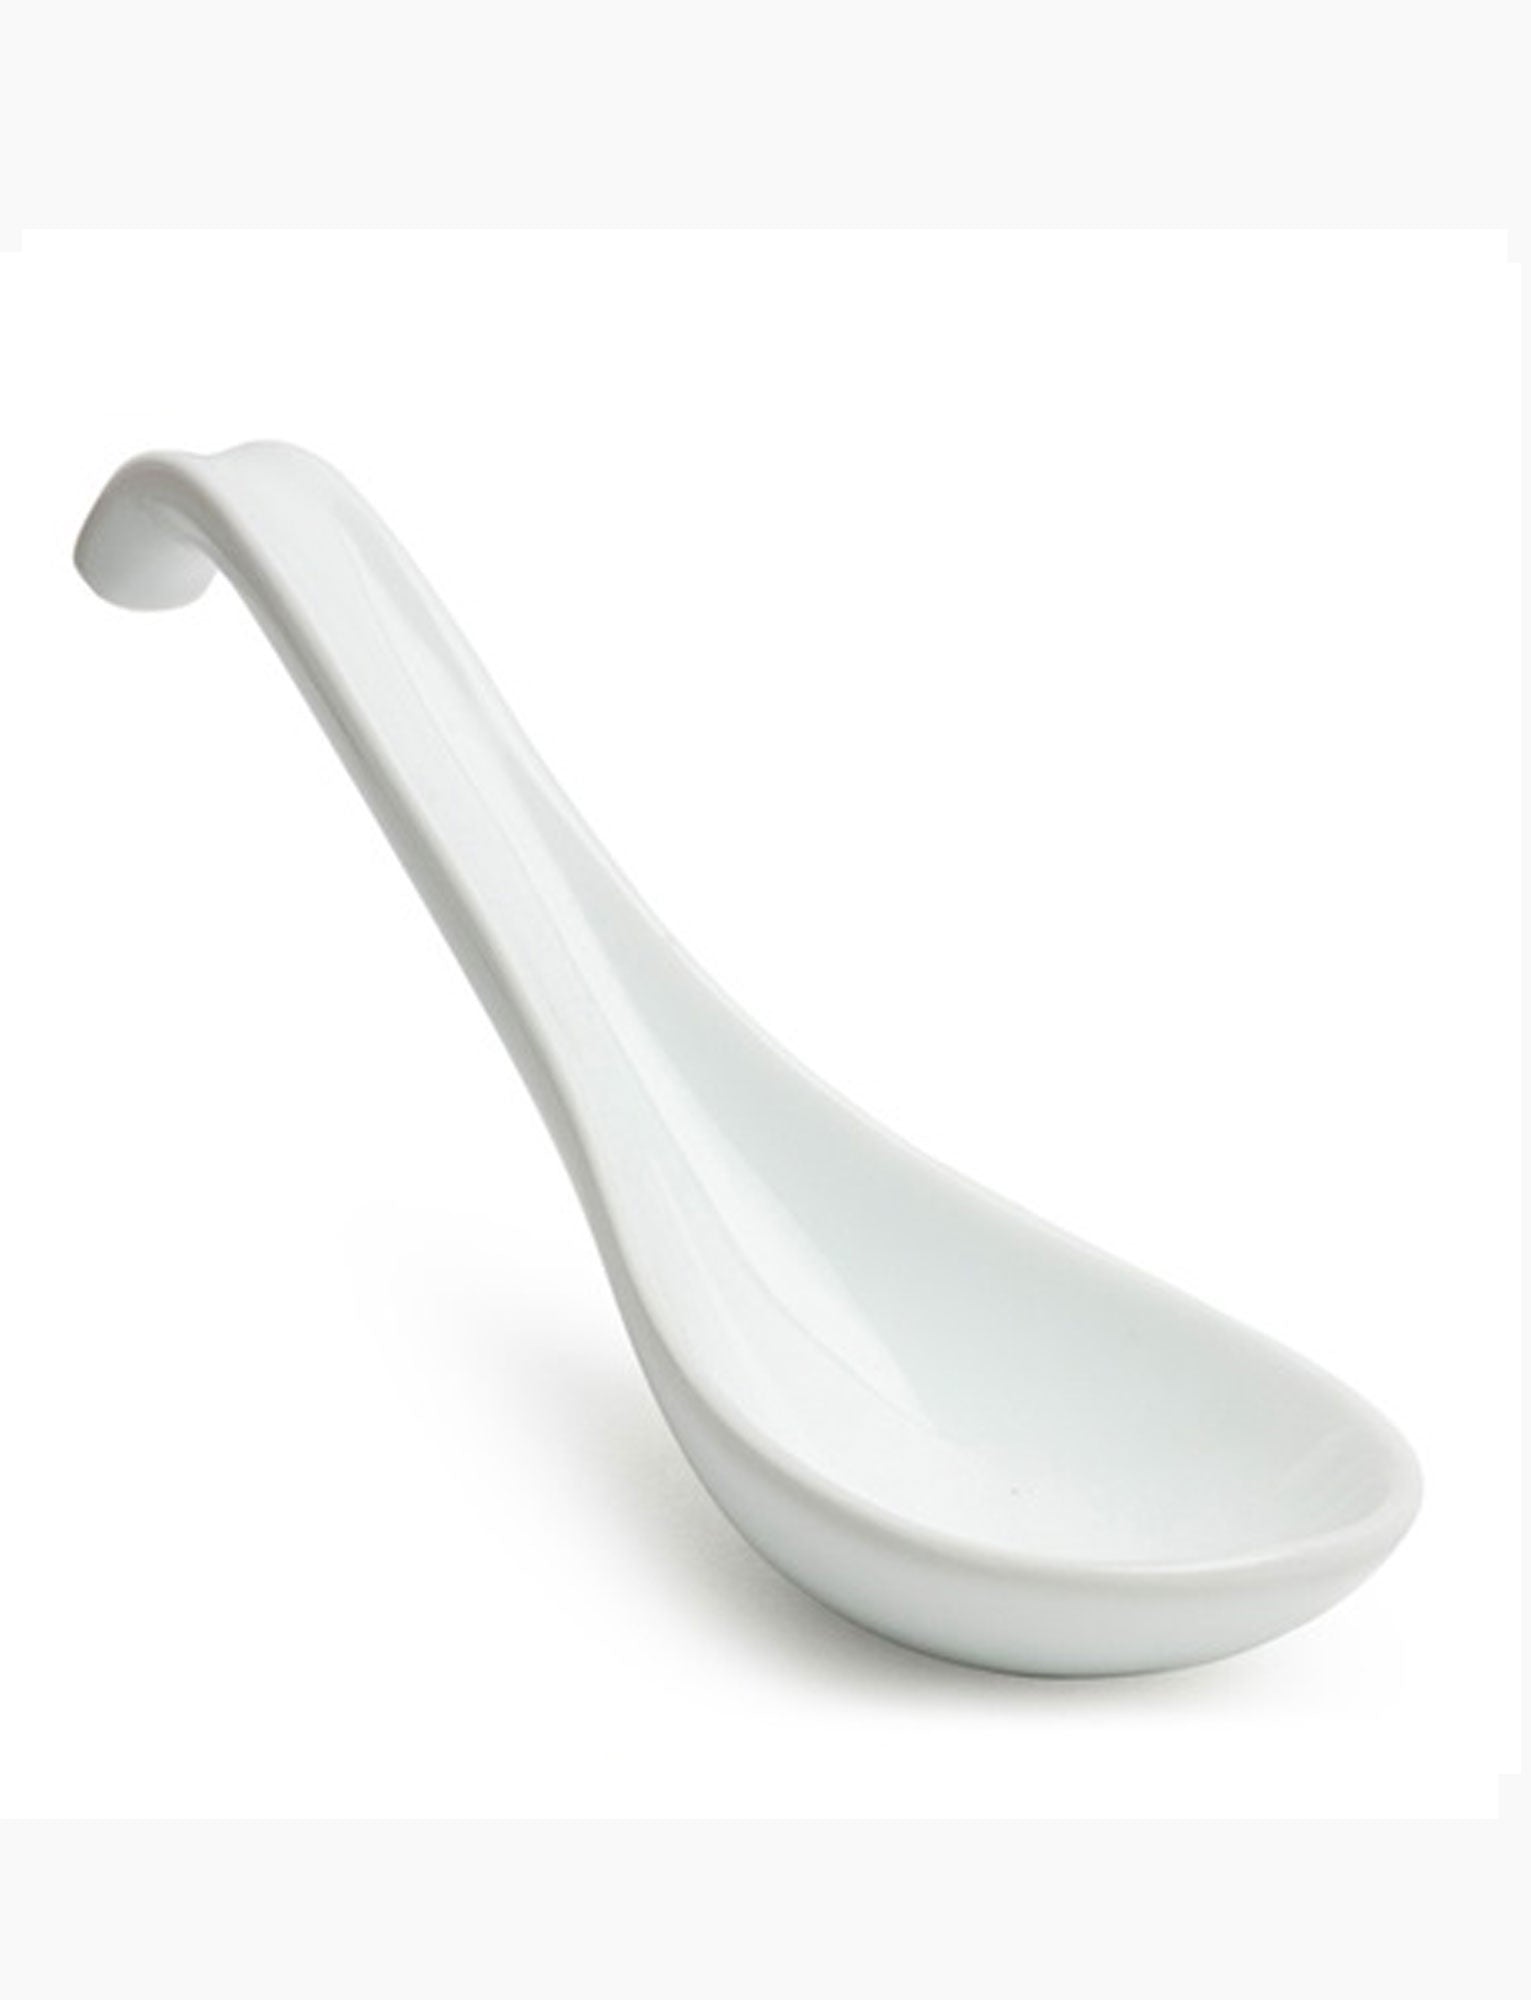 White Ceramic Soup Spoon